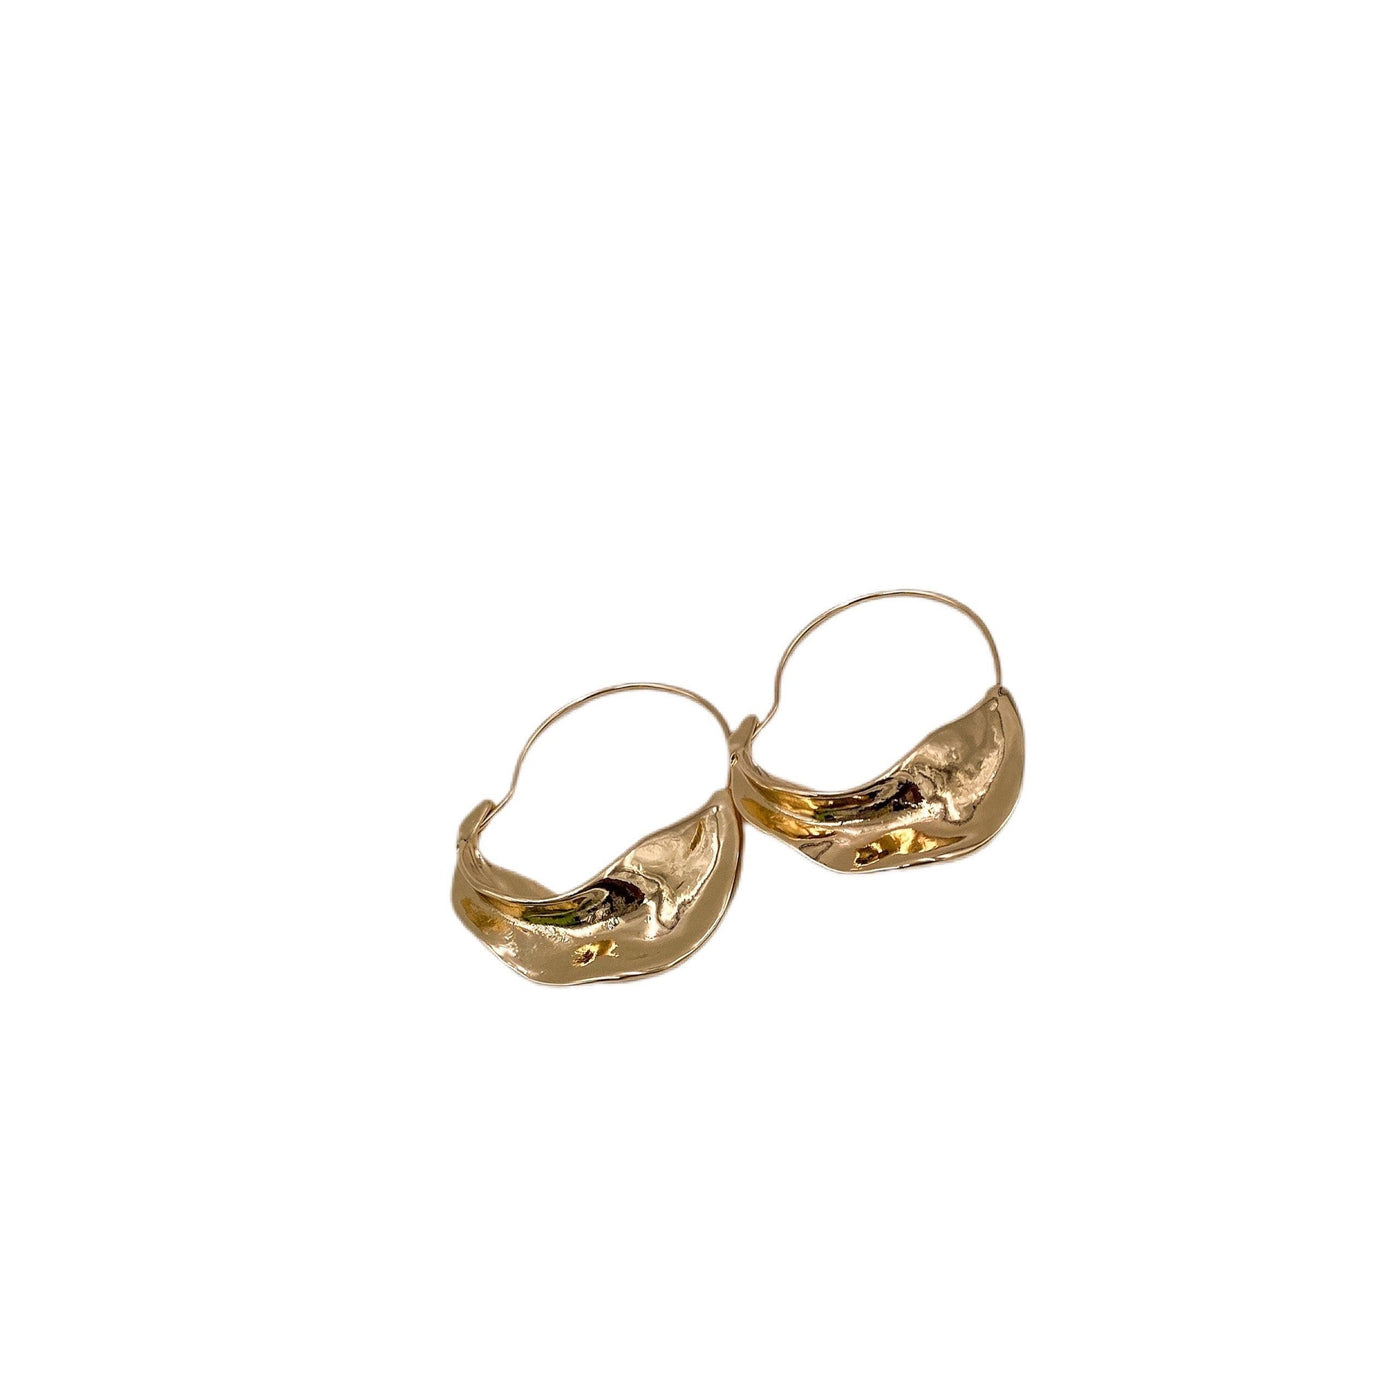 Dekyemso Earrings - Spend $50 on earrings and get 1 of these for free - Trufacebygrace